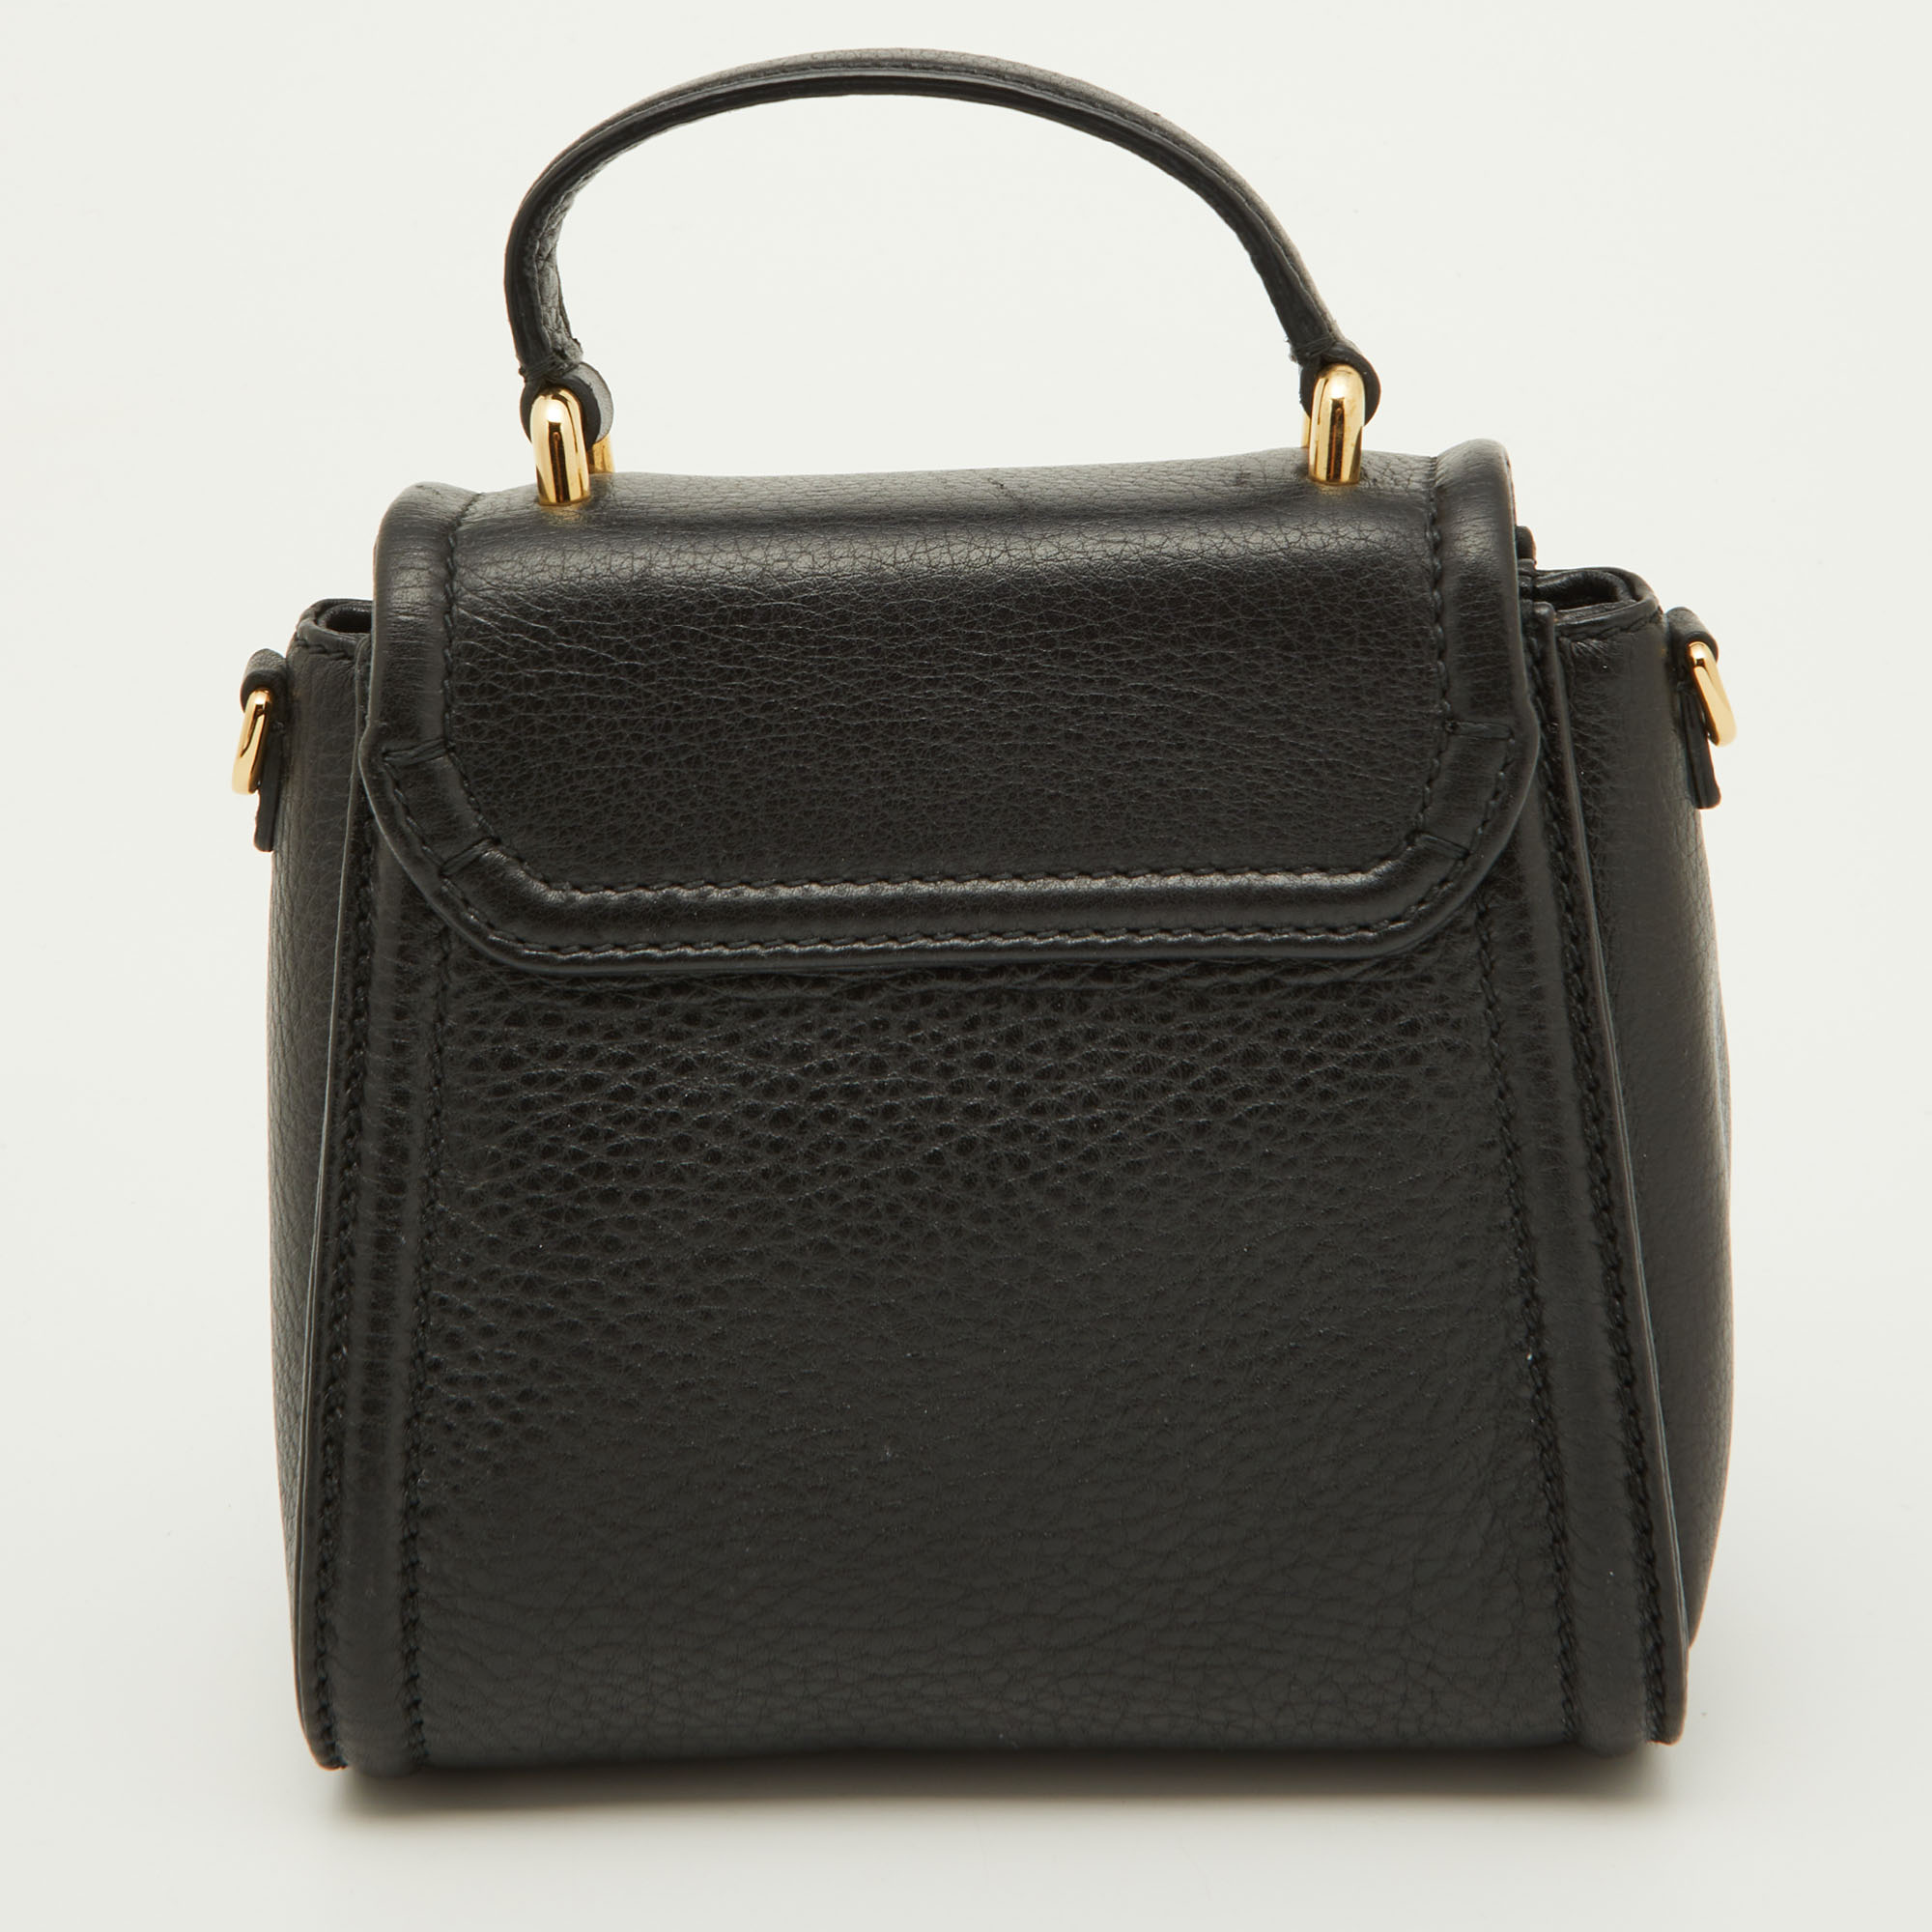 Dolce & Gabbana Black Leather Top Handle Bag